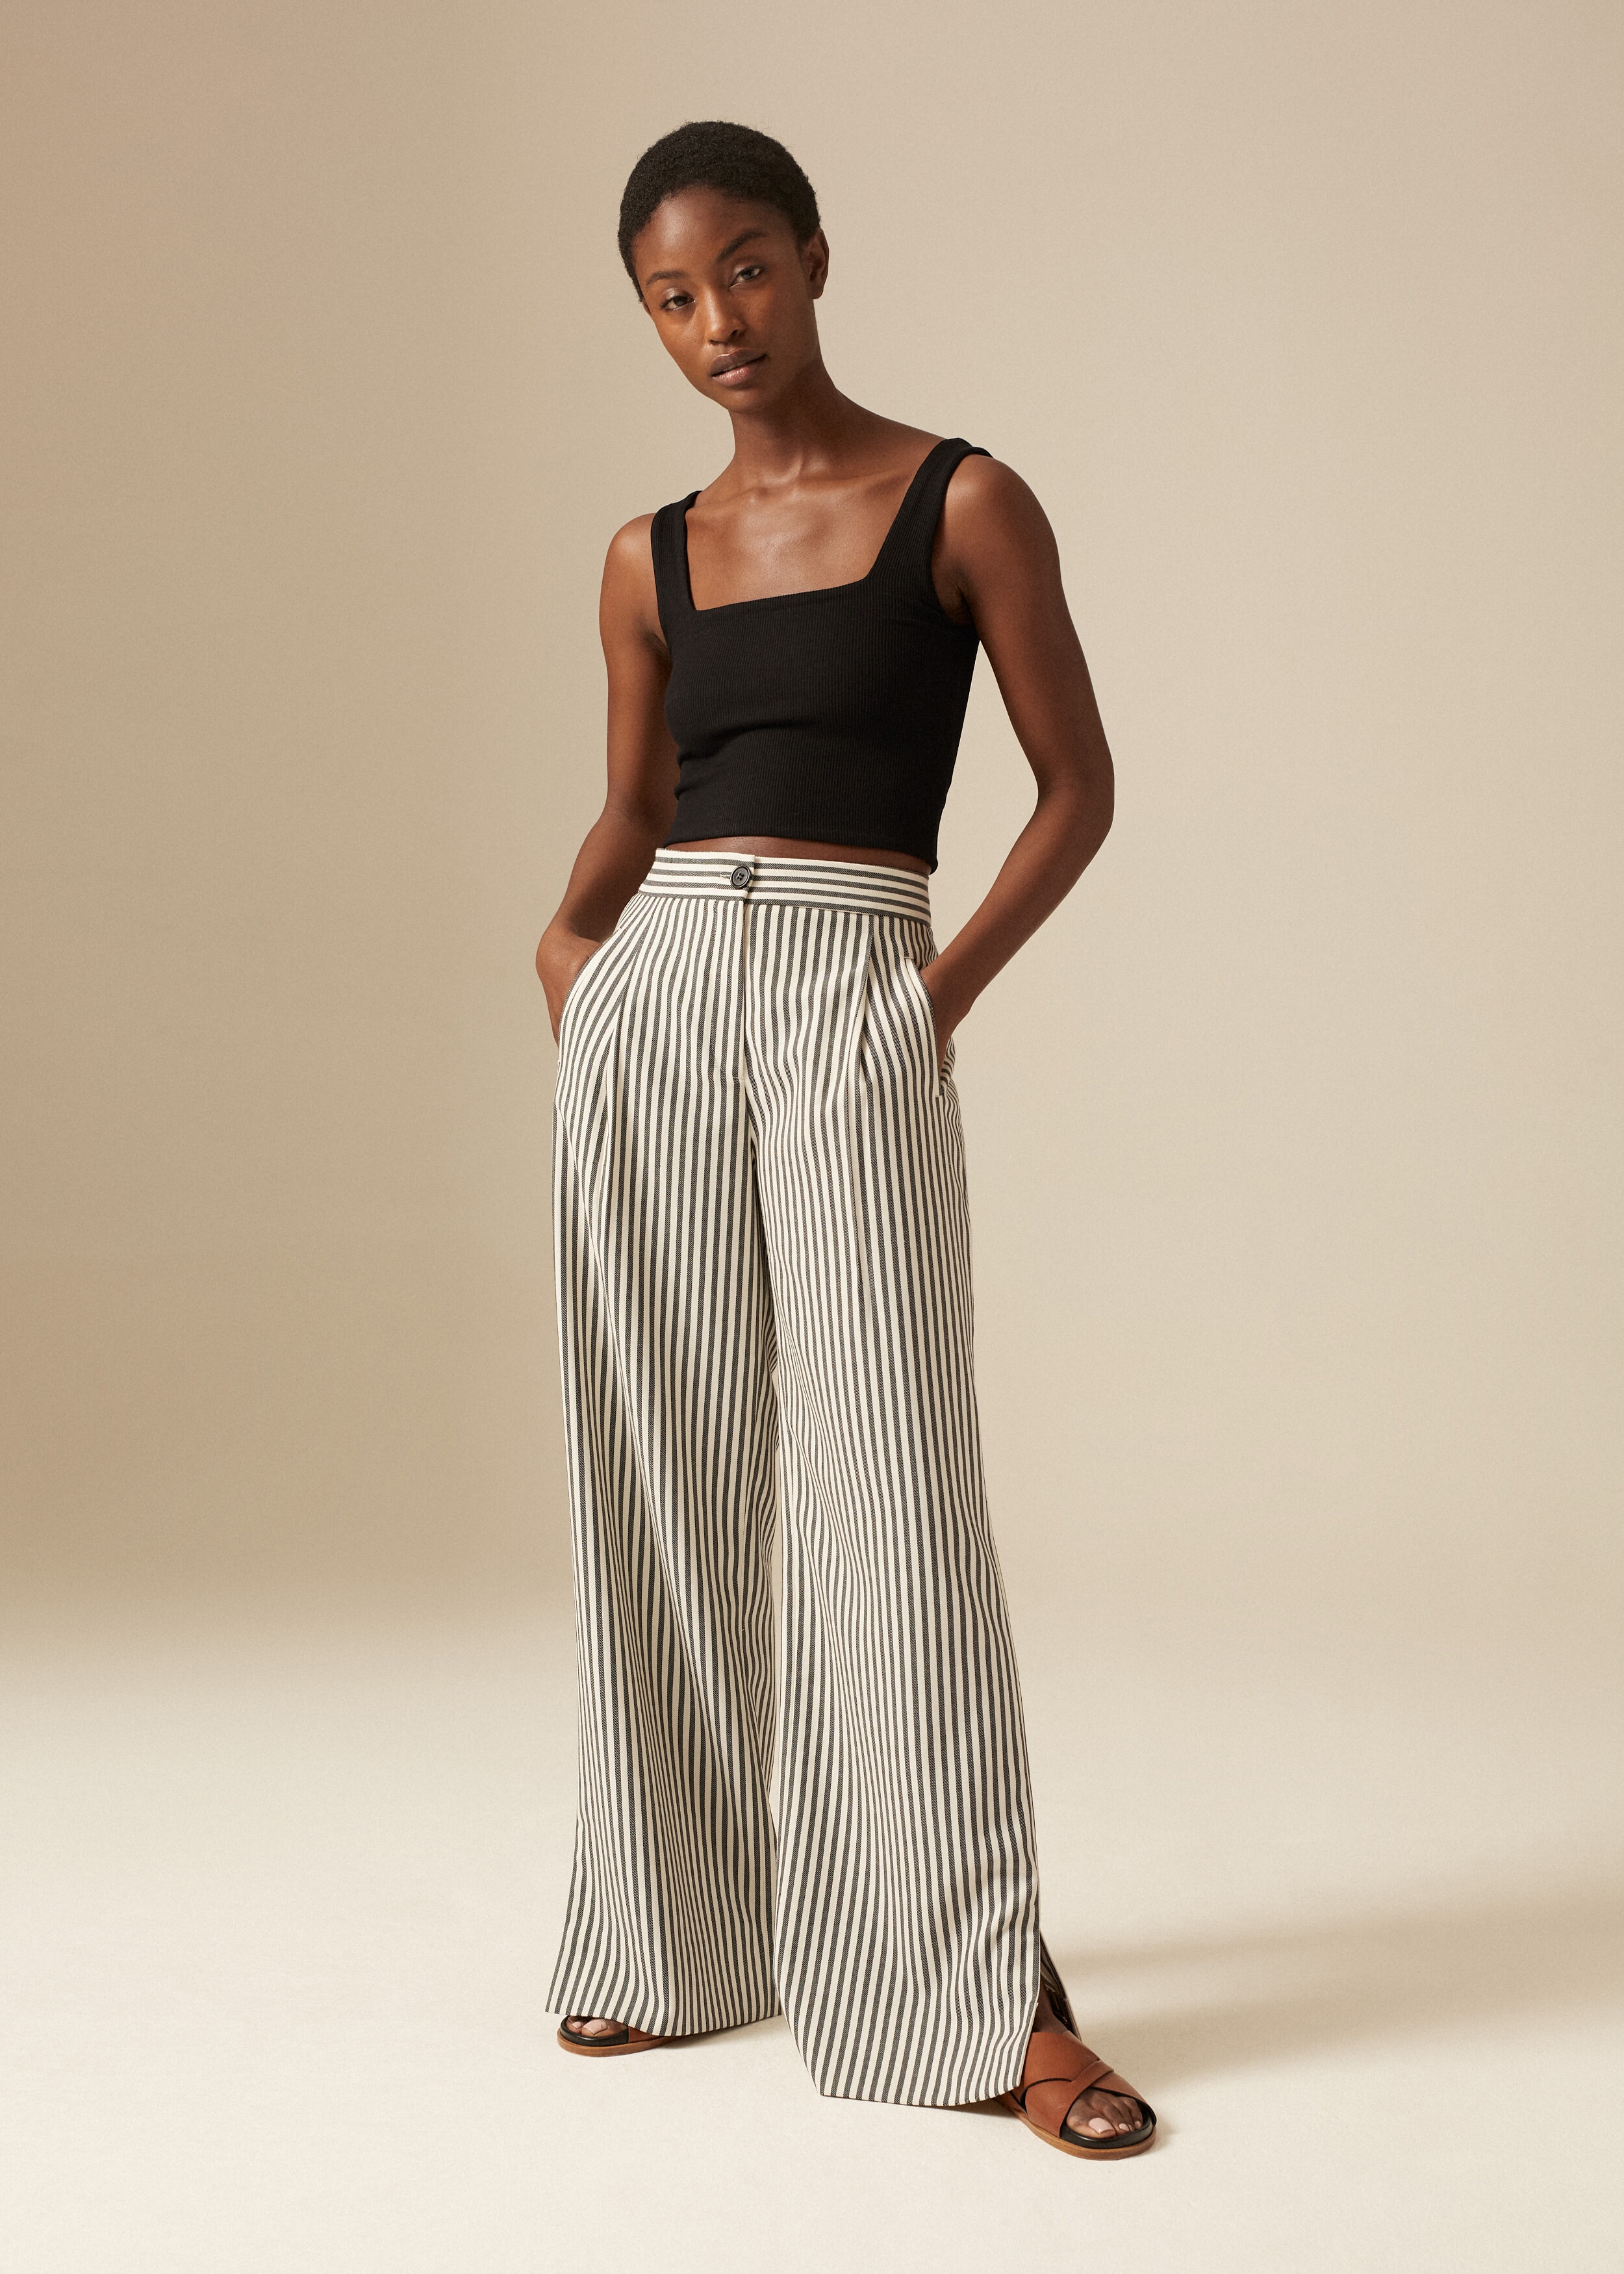 SweatyRocks Women's Vertical Striped Straight Leg Elastic High Waist Long  Pants Casual Trousers Black White L at Amazon Women's Clothing store